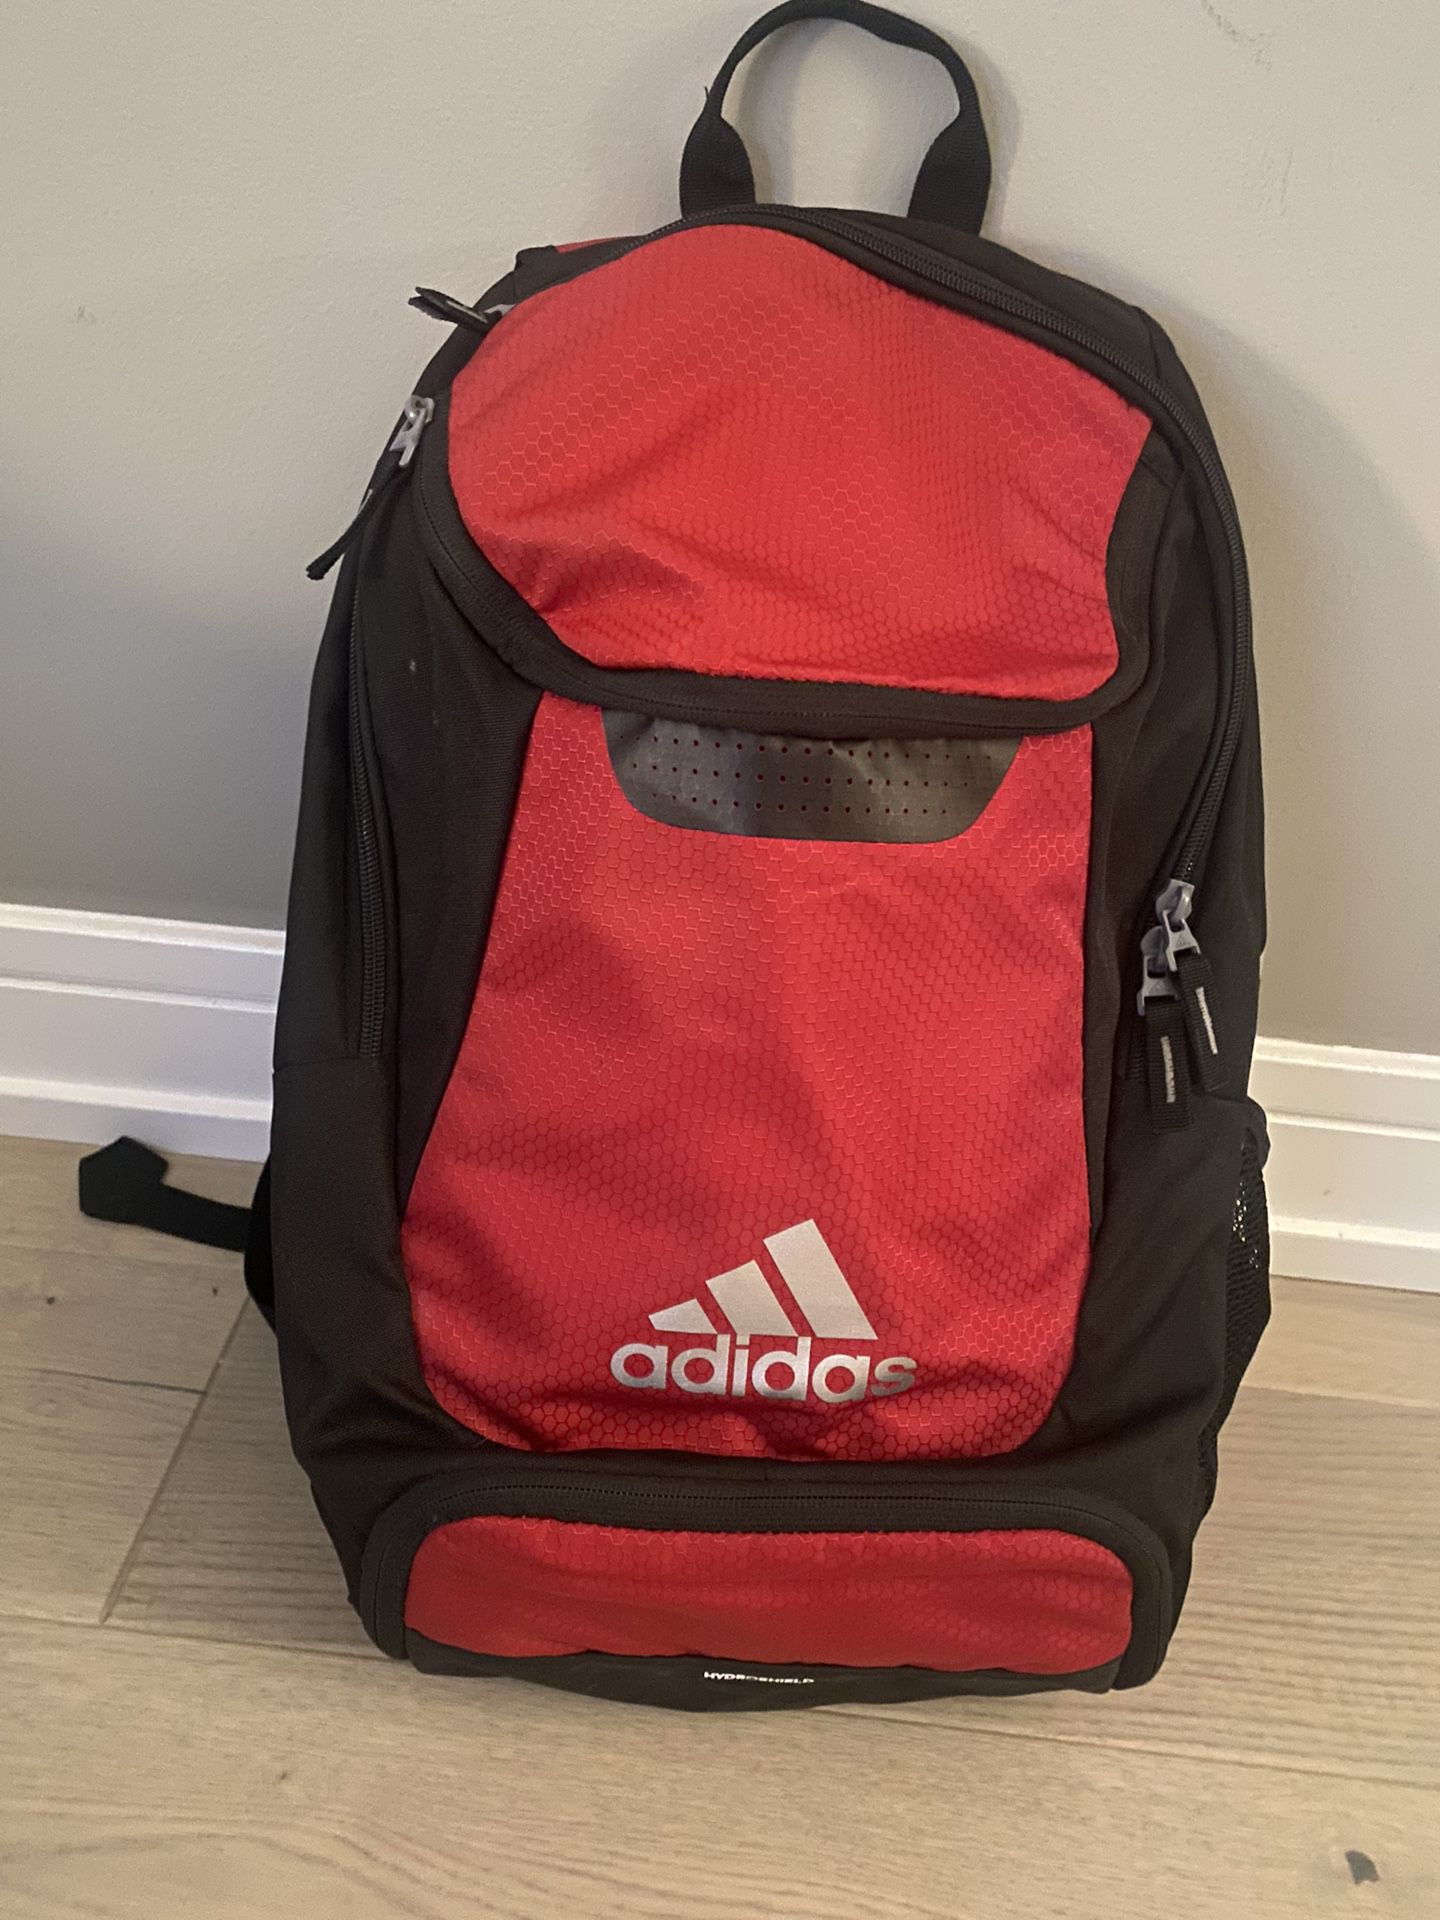 Adidas Soccer Backpack 